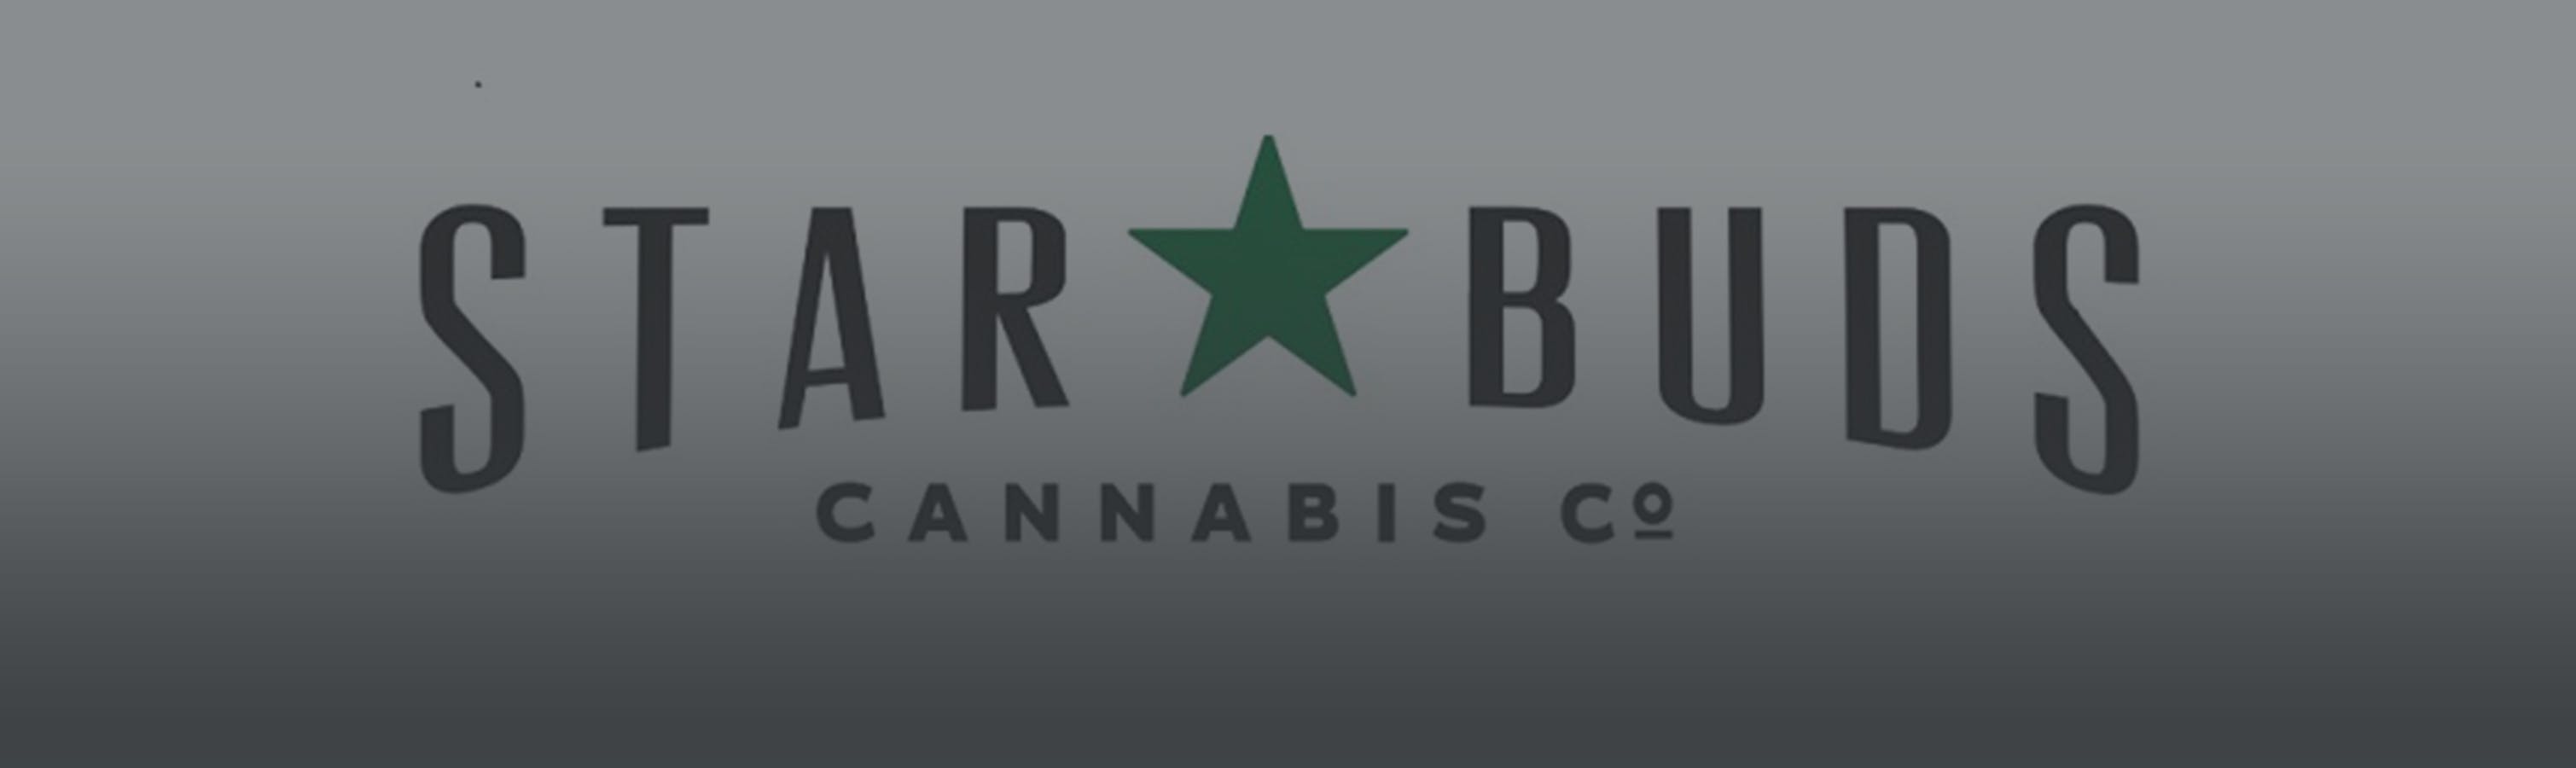 Cannabis Store Star Buds (Bradford) - 0